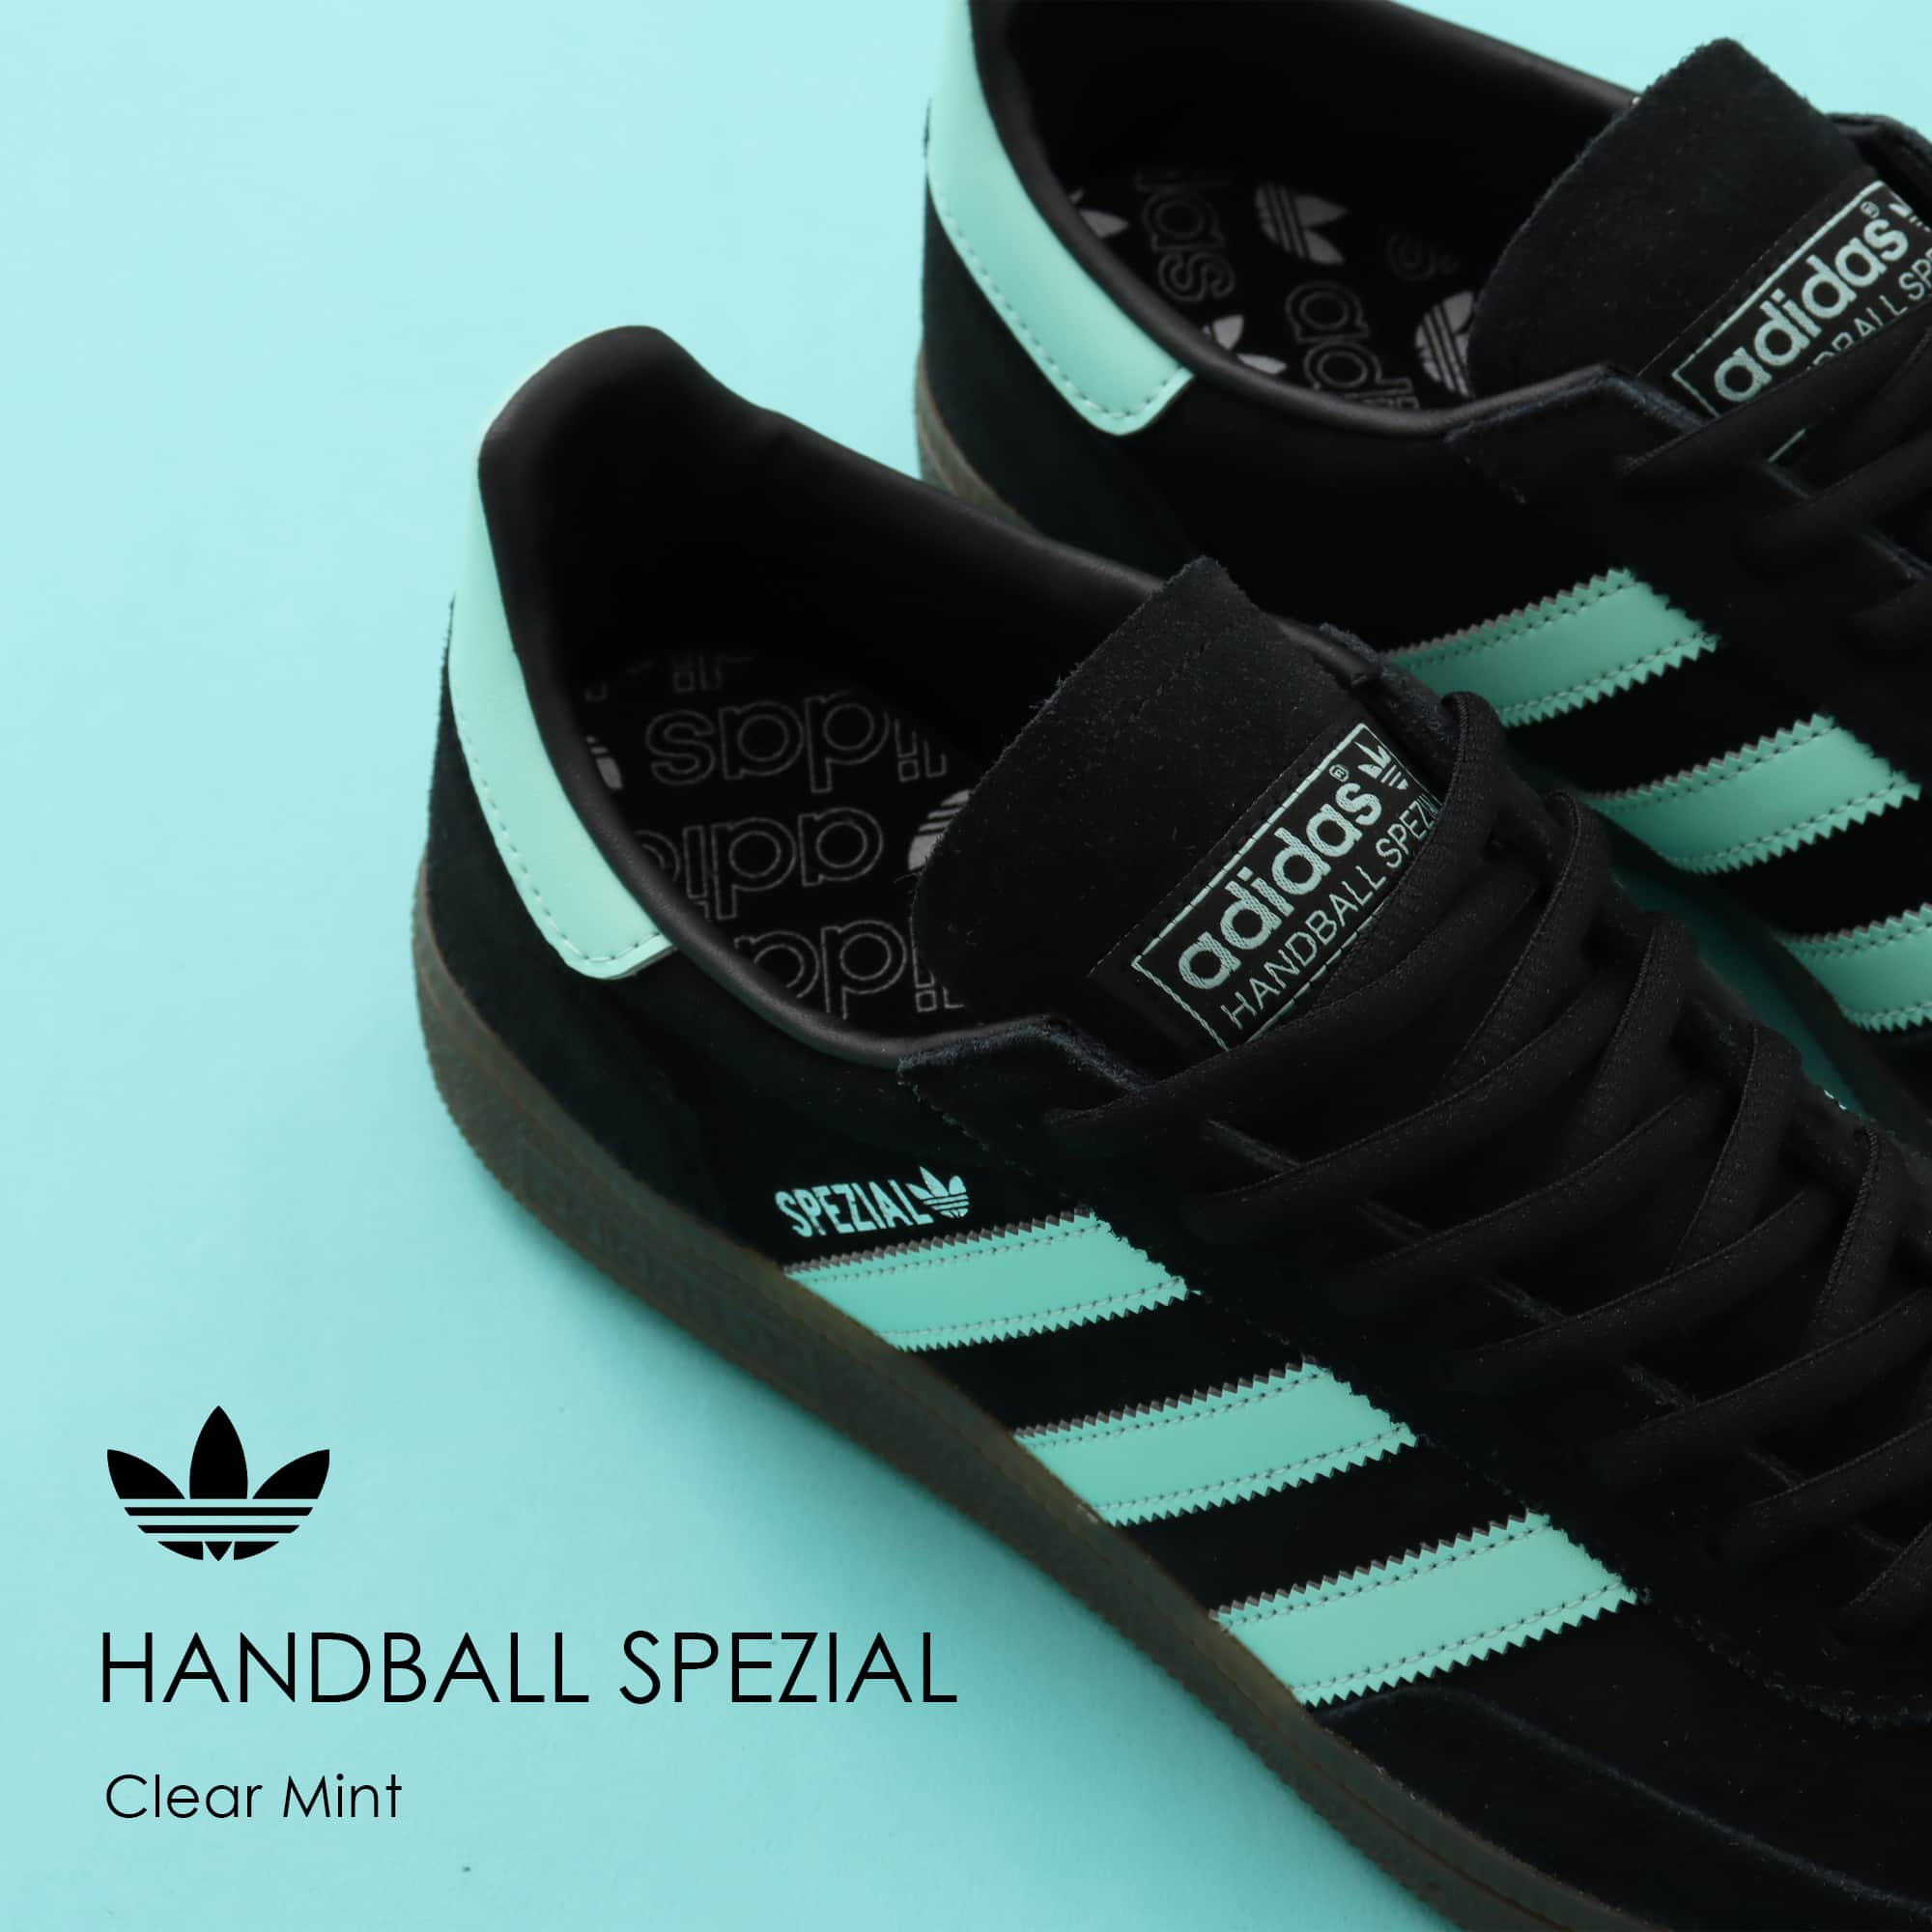 adidas Originals Handball Spezial Mint靴